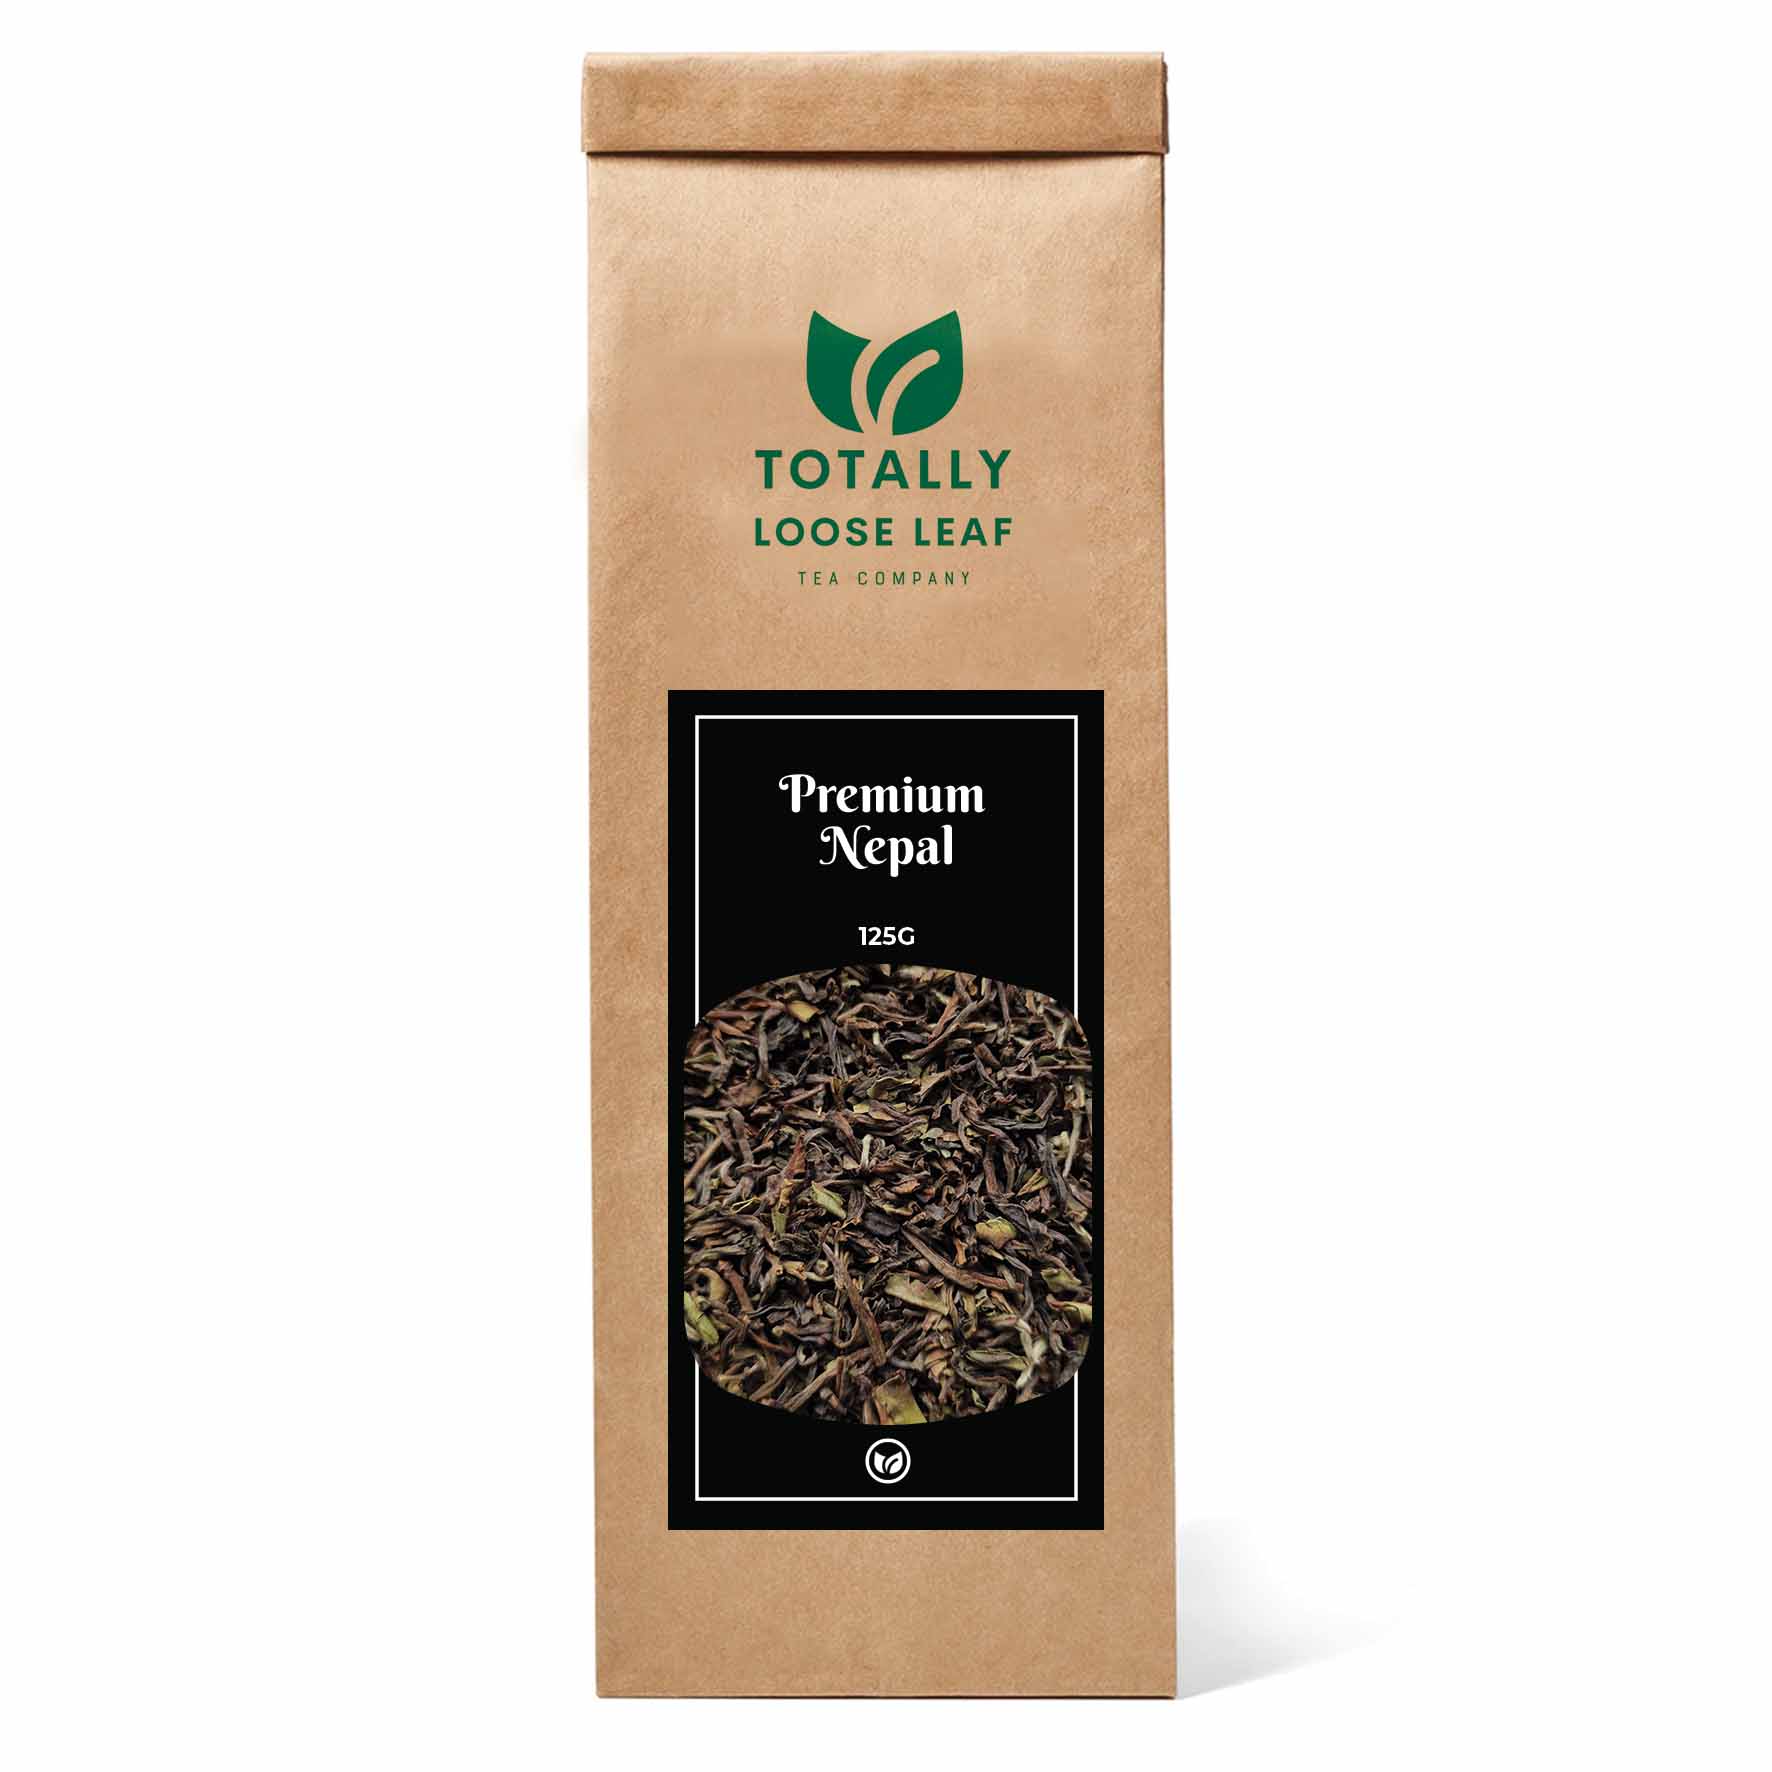 Premium Nepal Black Estate Loose Leaf Tea - one pouch